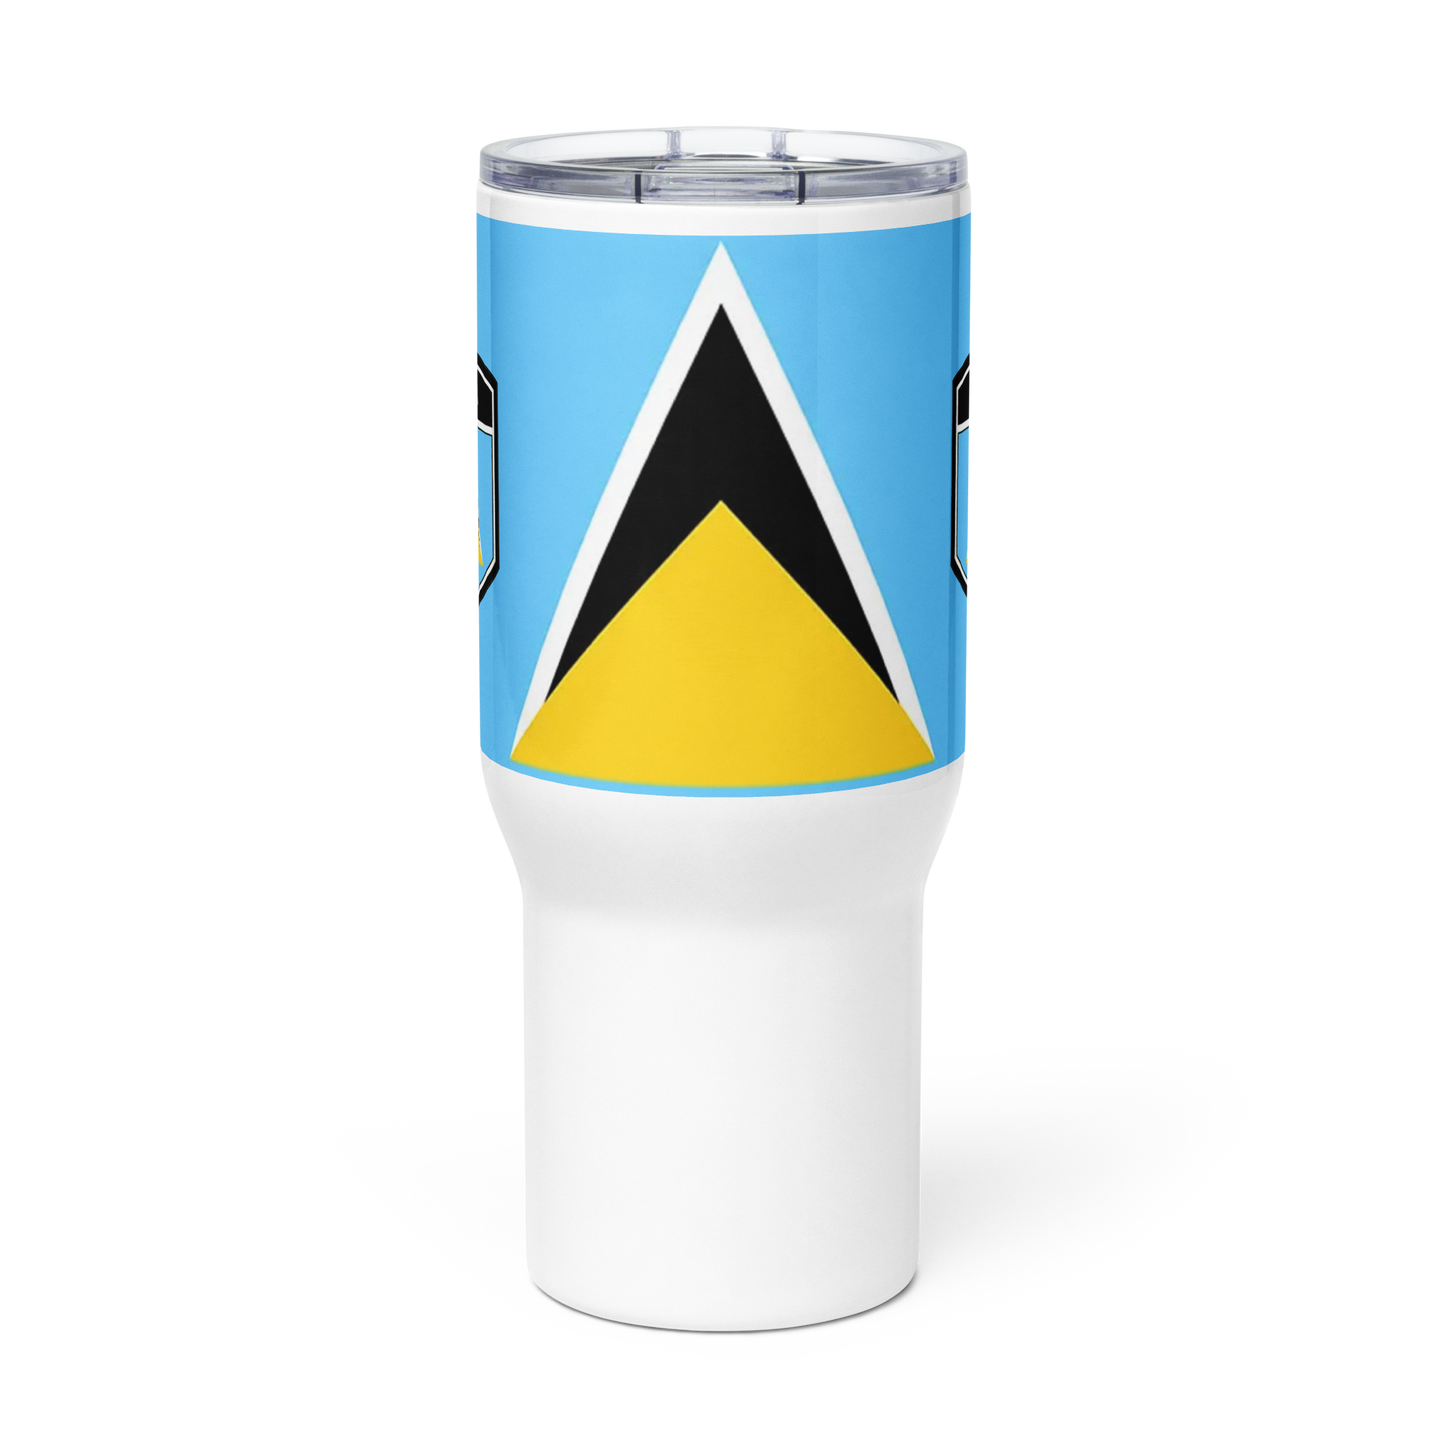 St. Lucia Travel mug with a handle